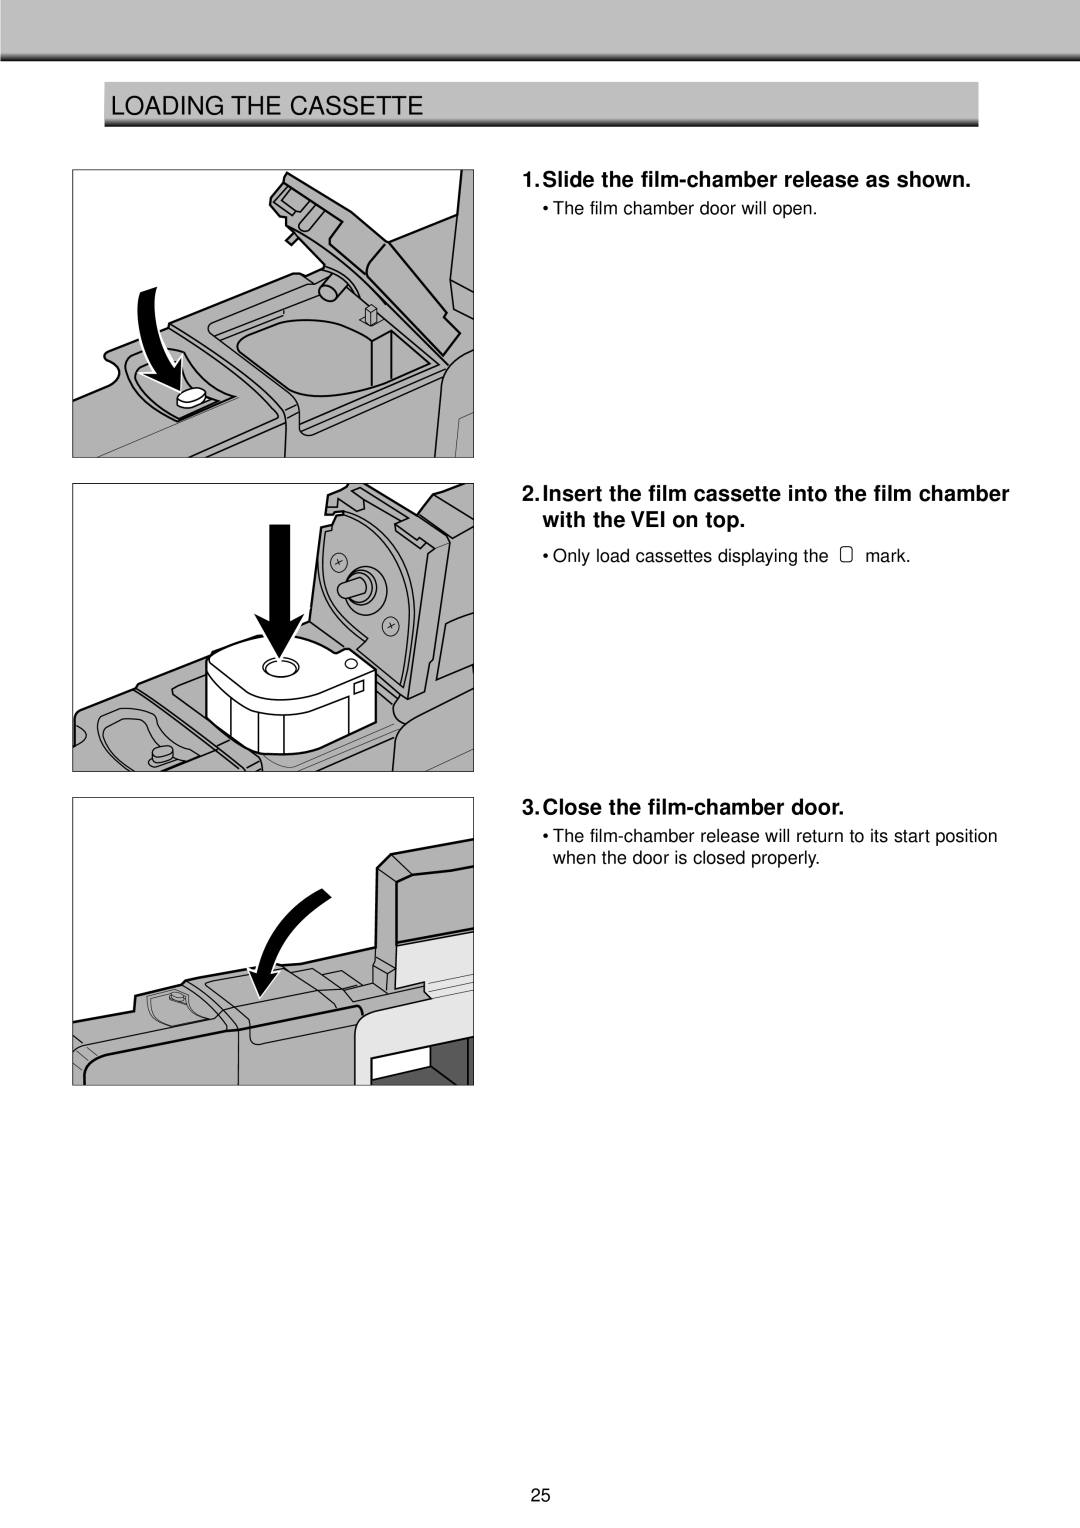 Konica Minolta II manual Loading The Cassette, Slide the film-chamberrelease as shown, Close the film-chamberdoor 